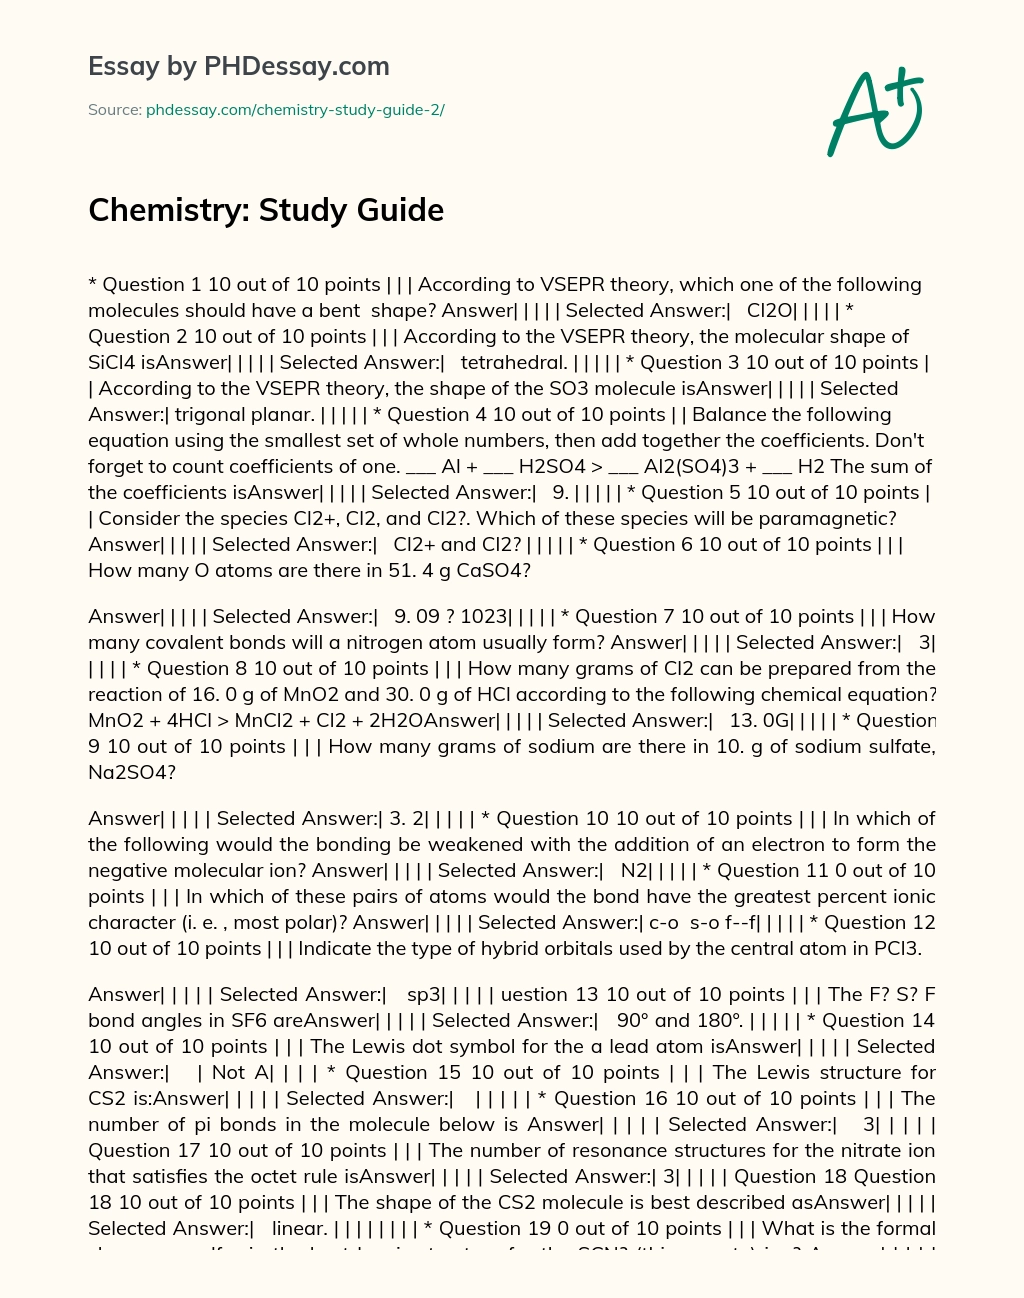 Chemistry: Study Guide essay